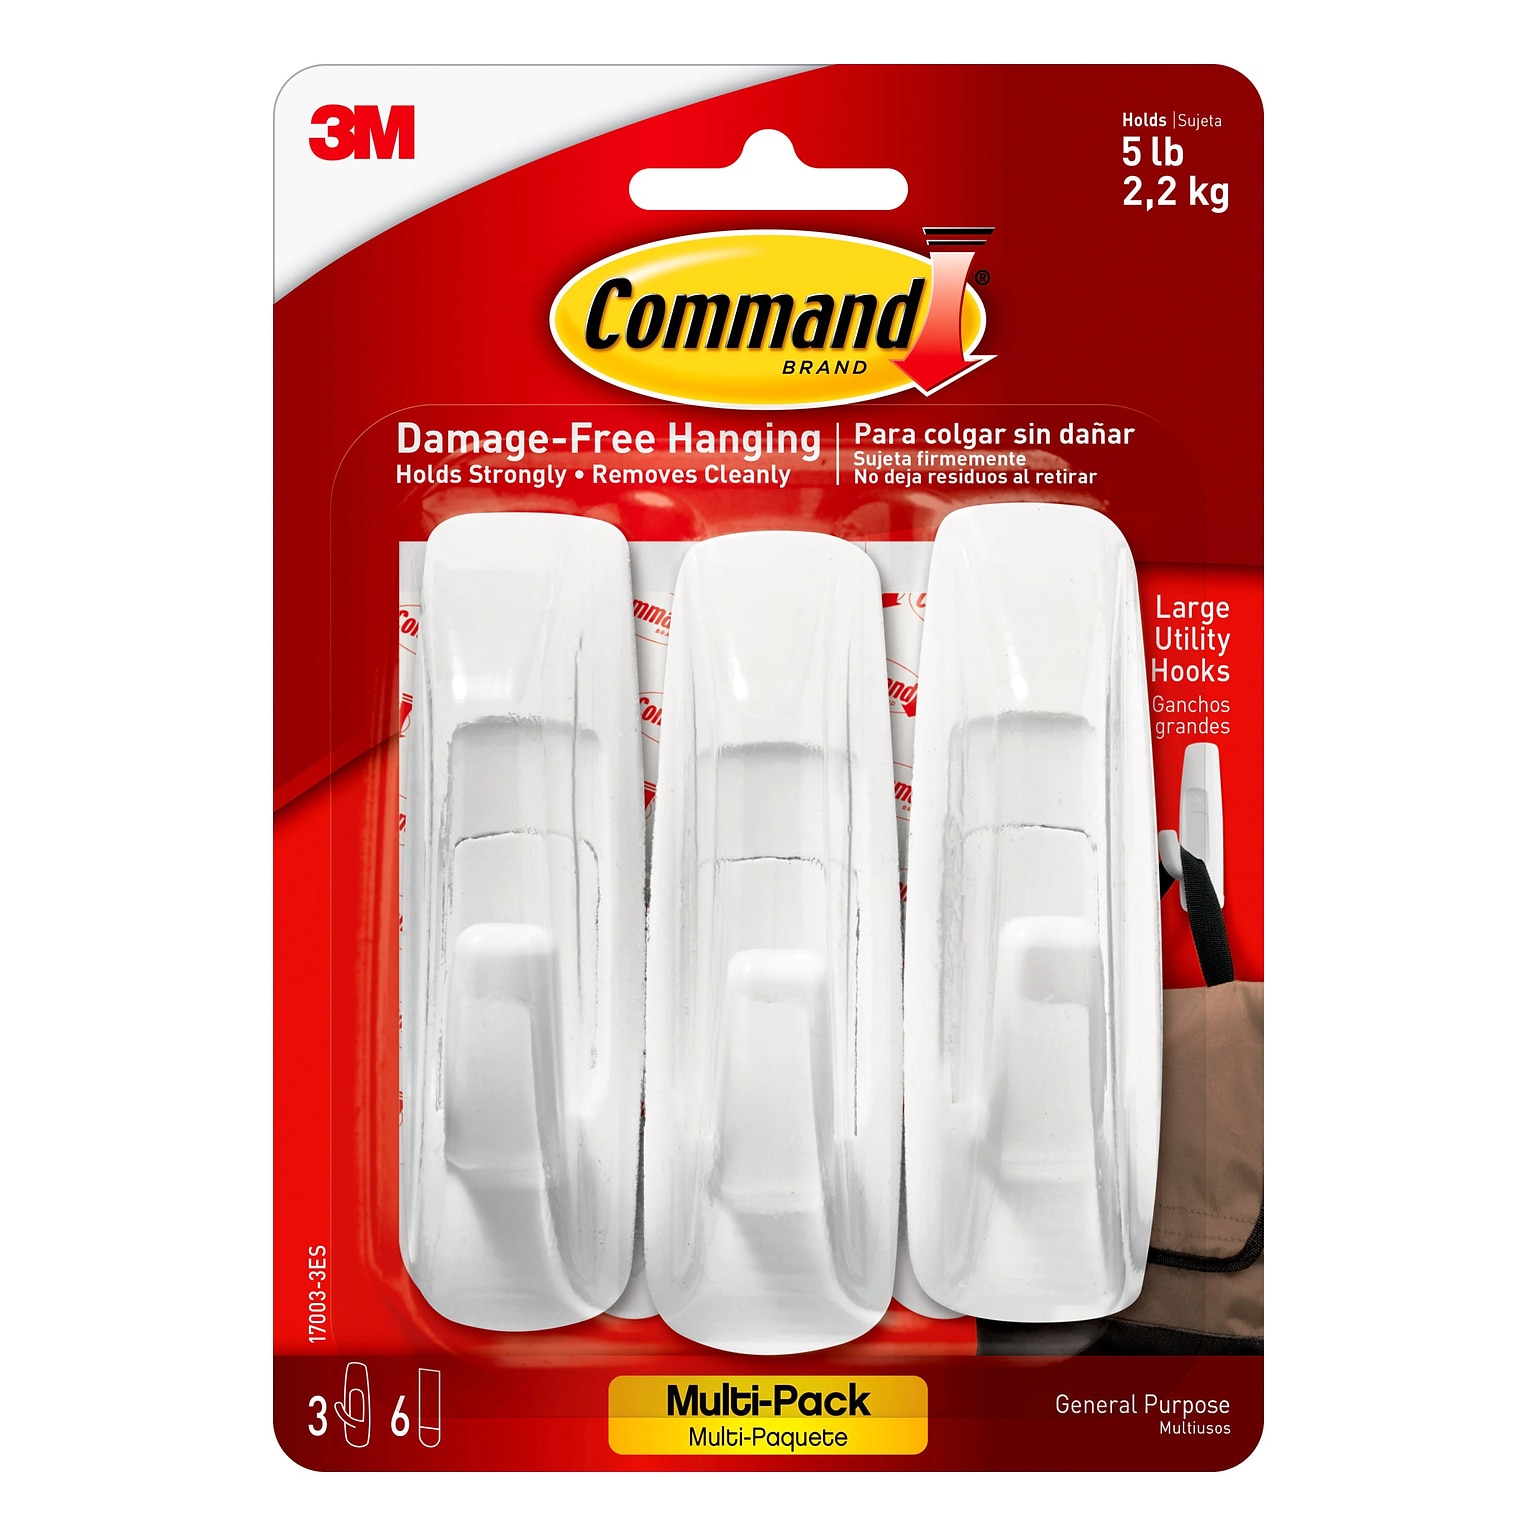 Command Large Utility Hooks, White, Damage Free Hanging of Dorm Room Decorations, 3 Command Hooks, 6 Command Strips (17003-3ES)